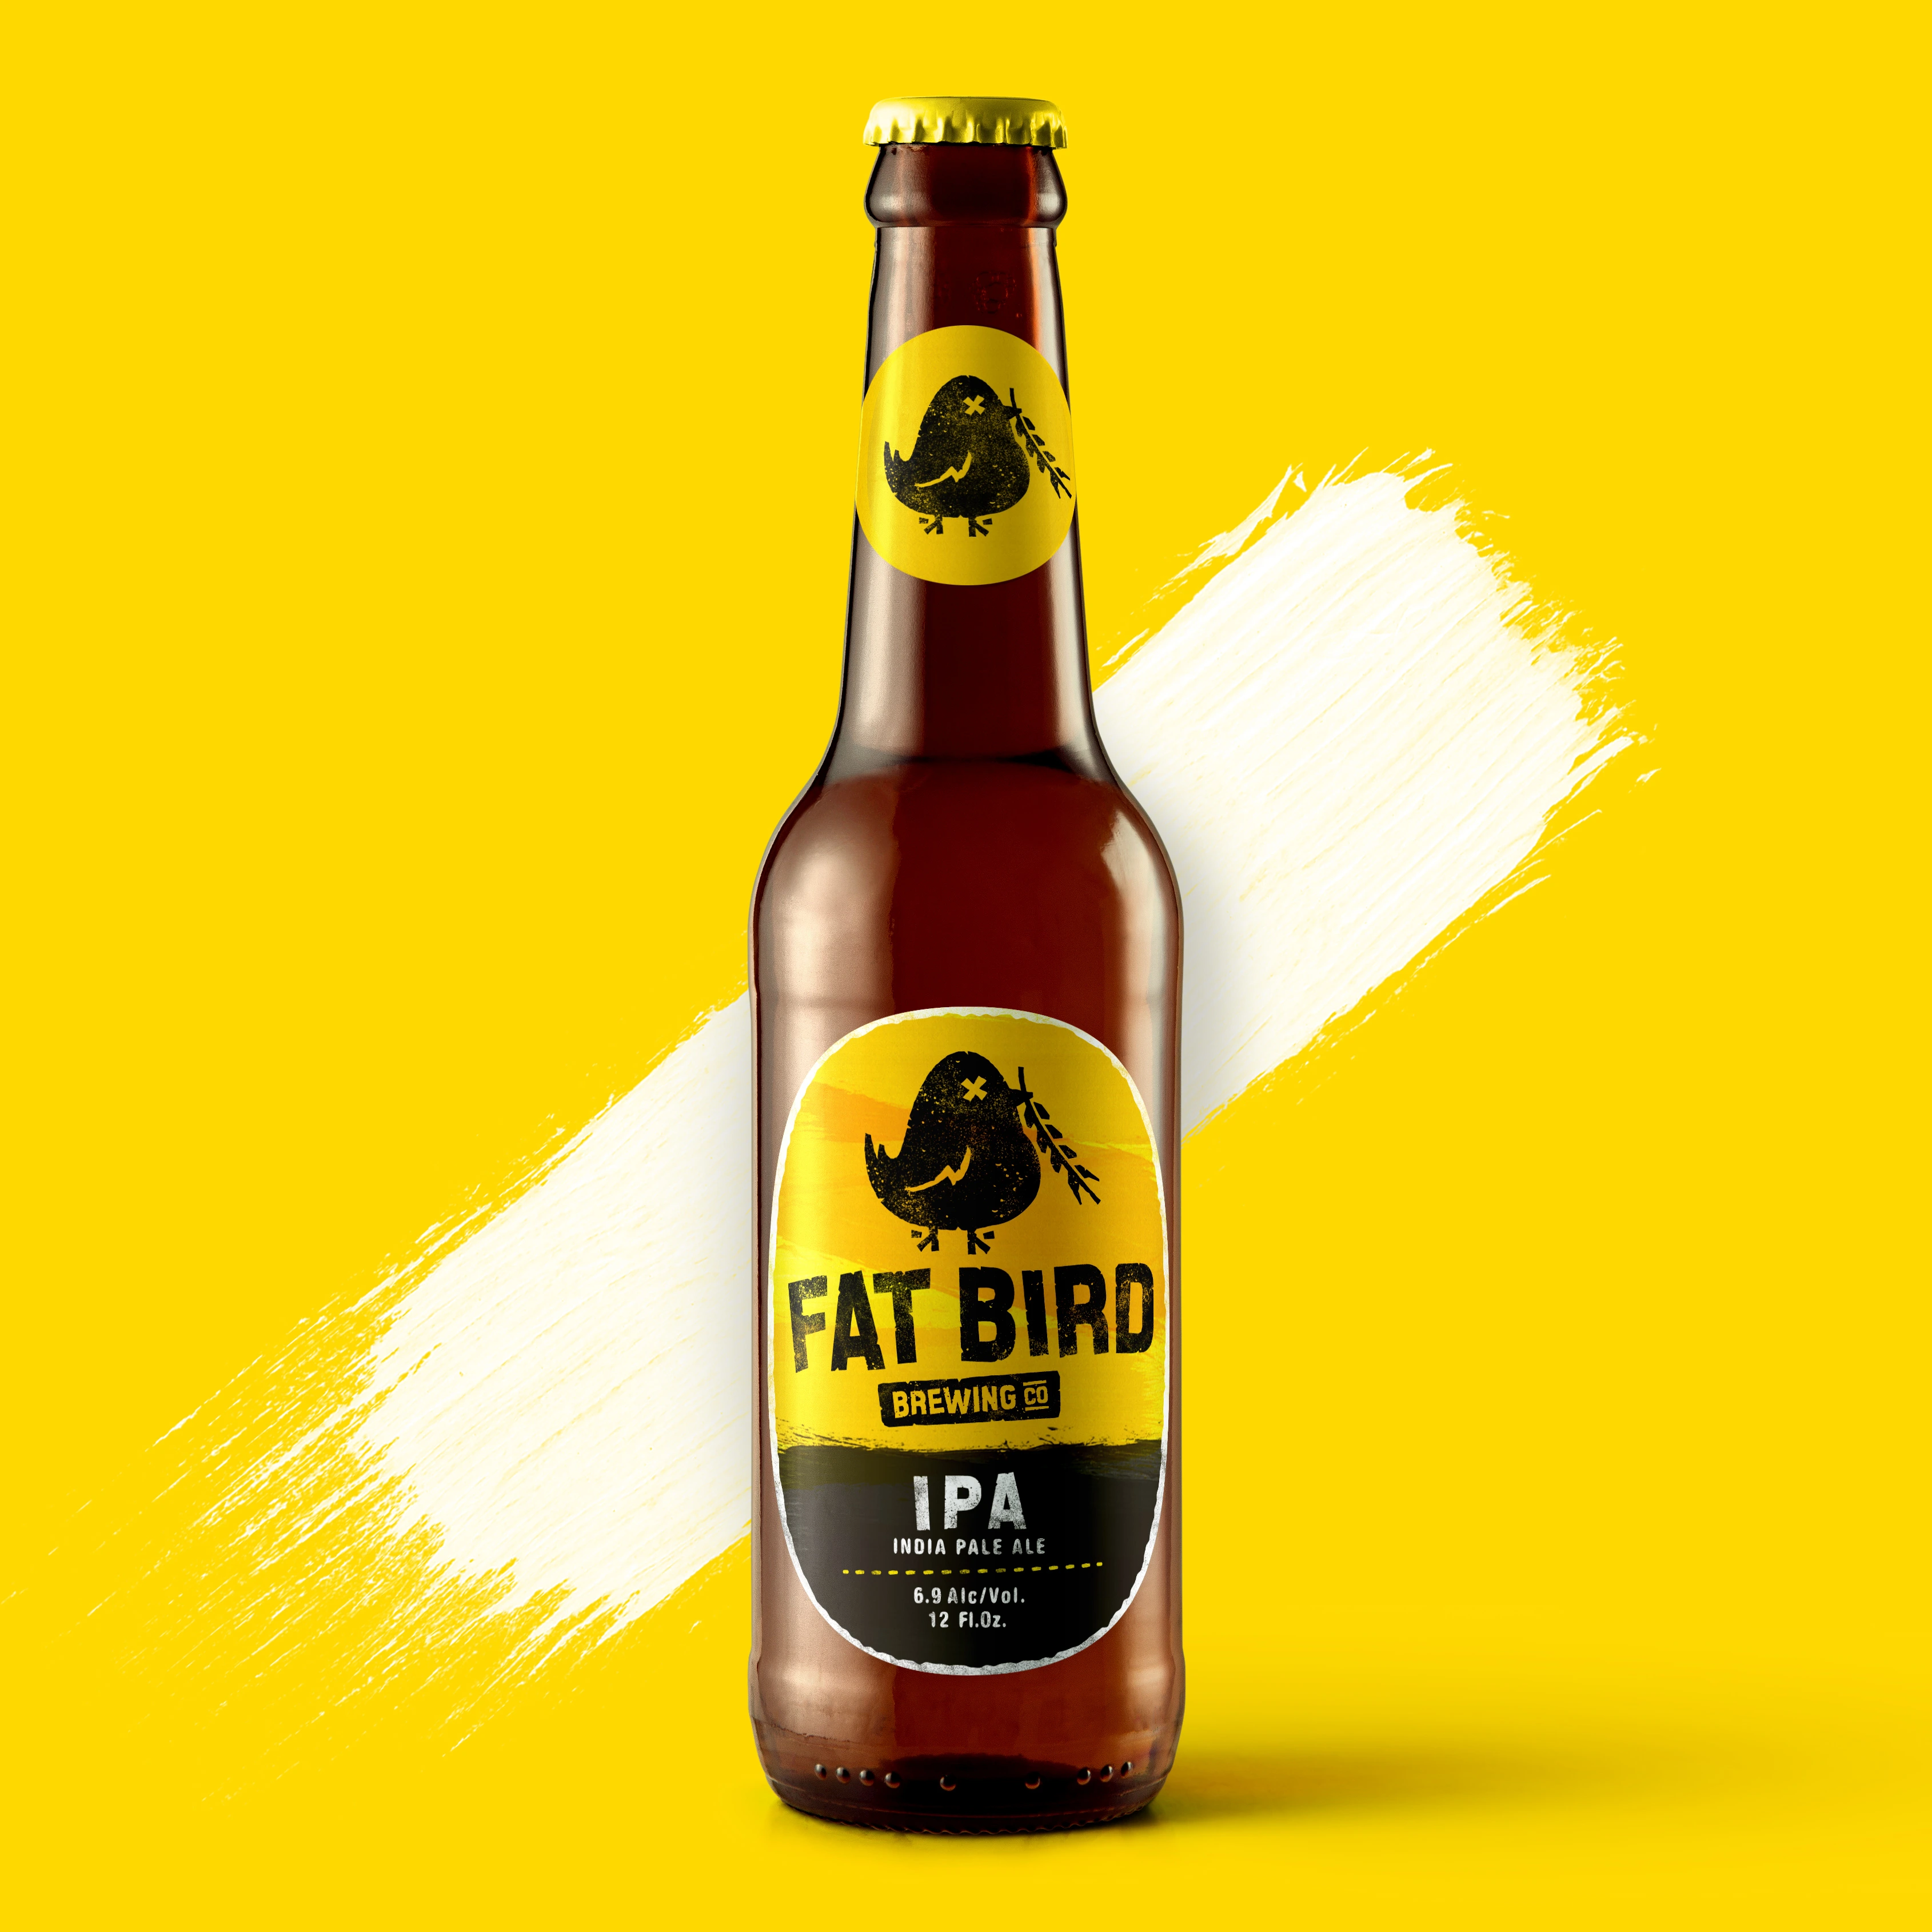 Fatbird Beer Packaging